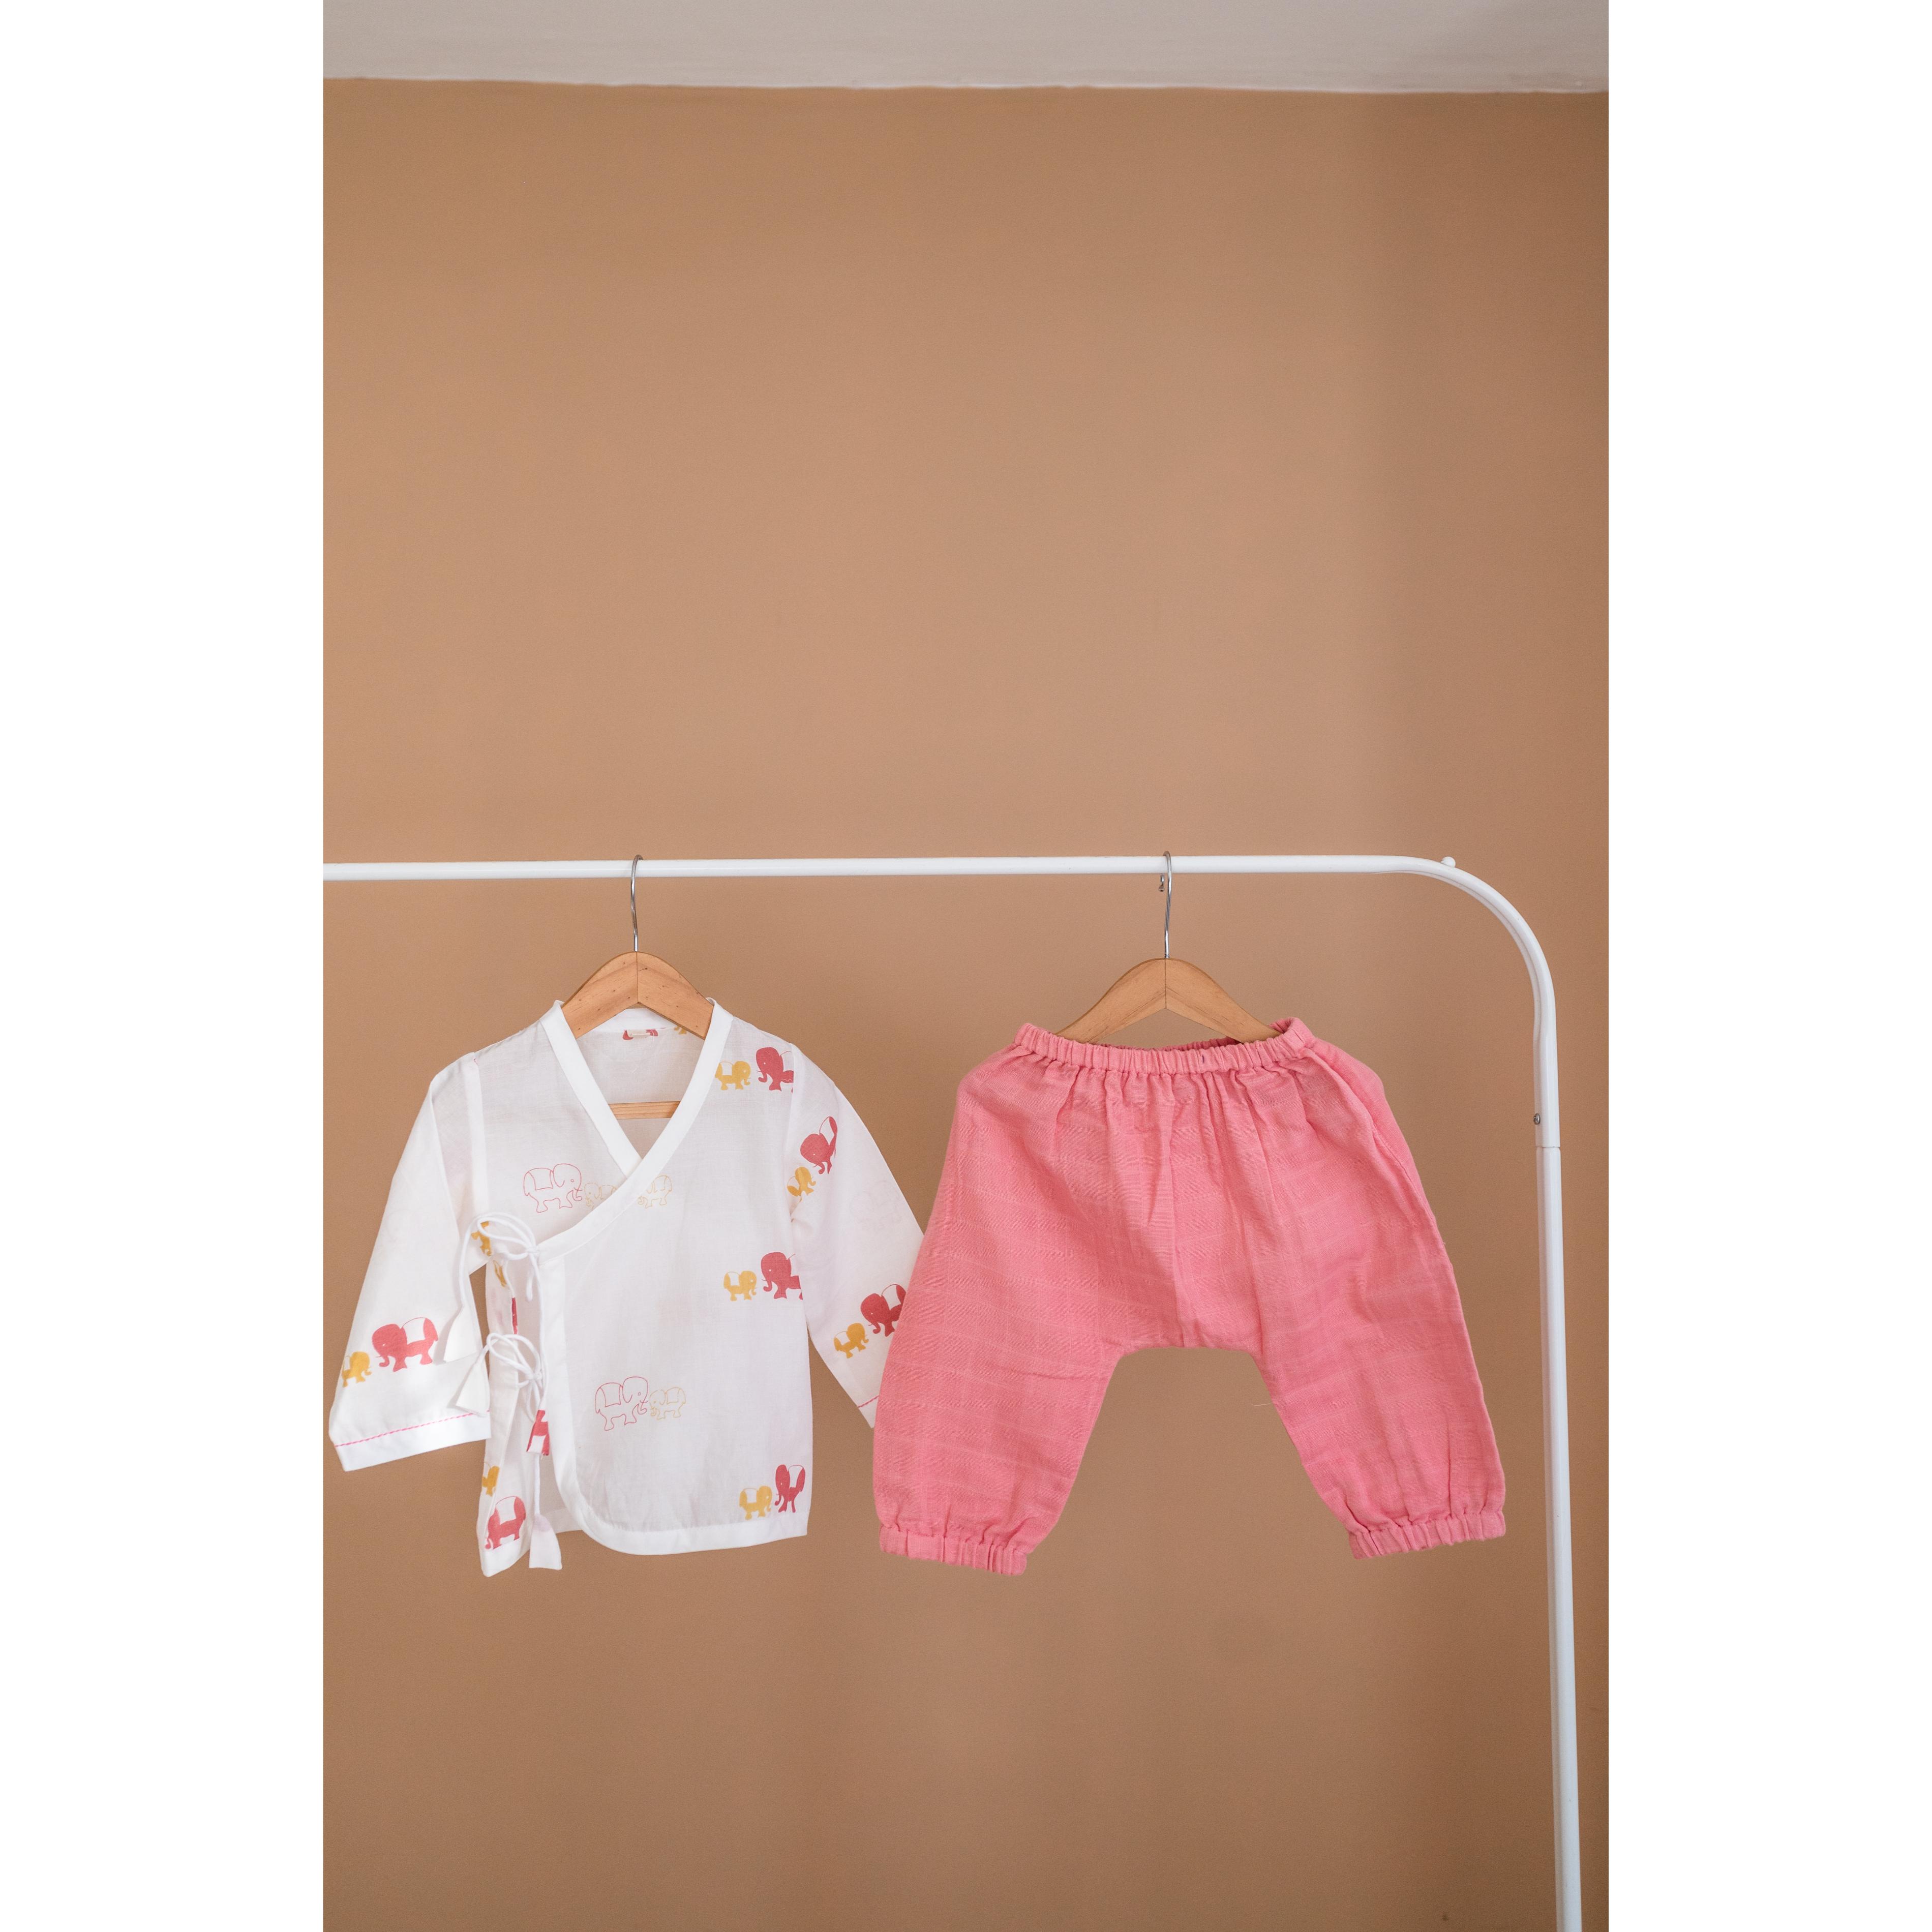 Masaya Organic Baby Jhabla Pajama Set - Colours of the Earth - Elle Pink